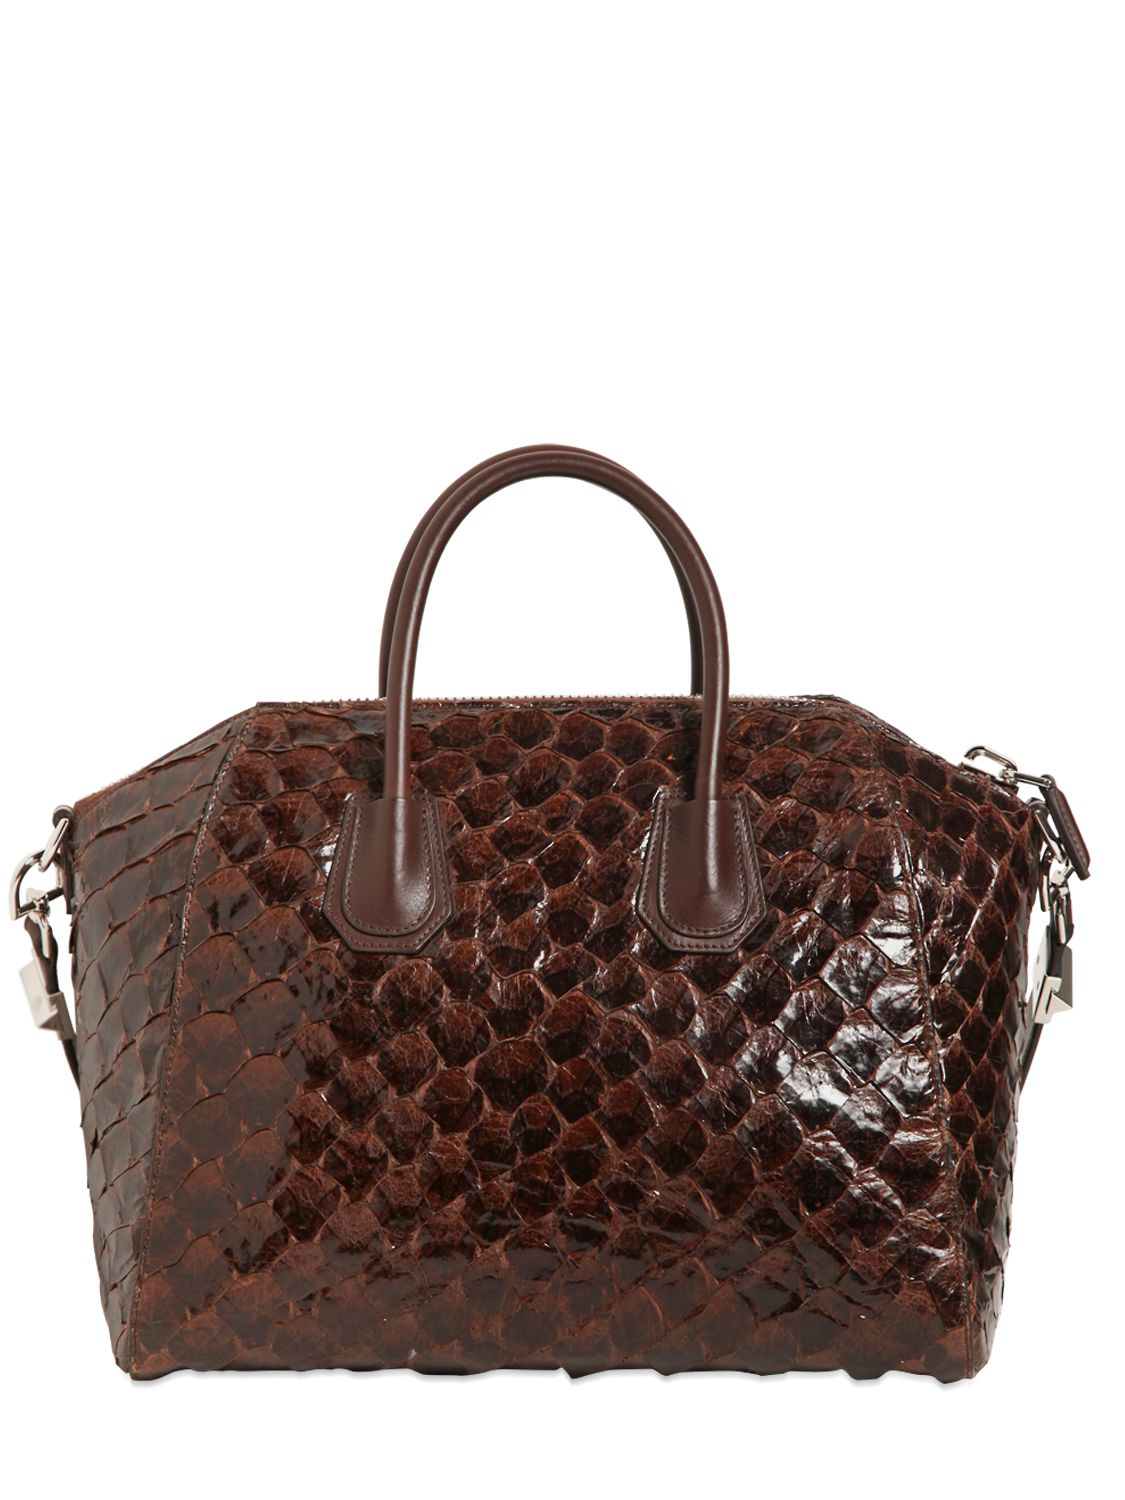 Givenchy Medium Antigona Pirarucu & Leather Bag in Brown (CHOCOLATE) | Lyst